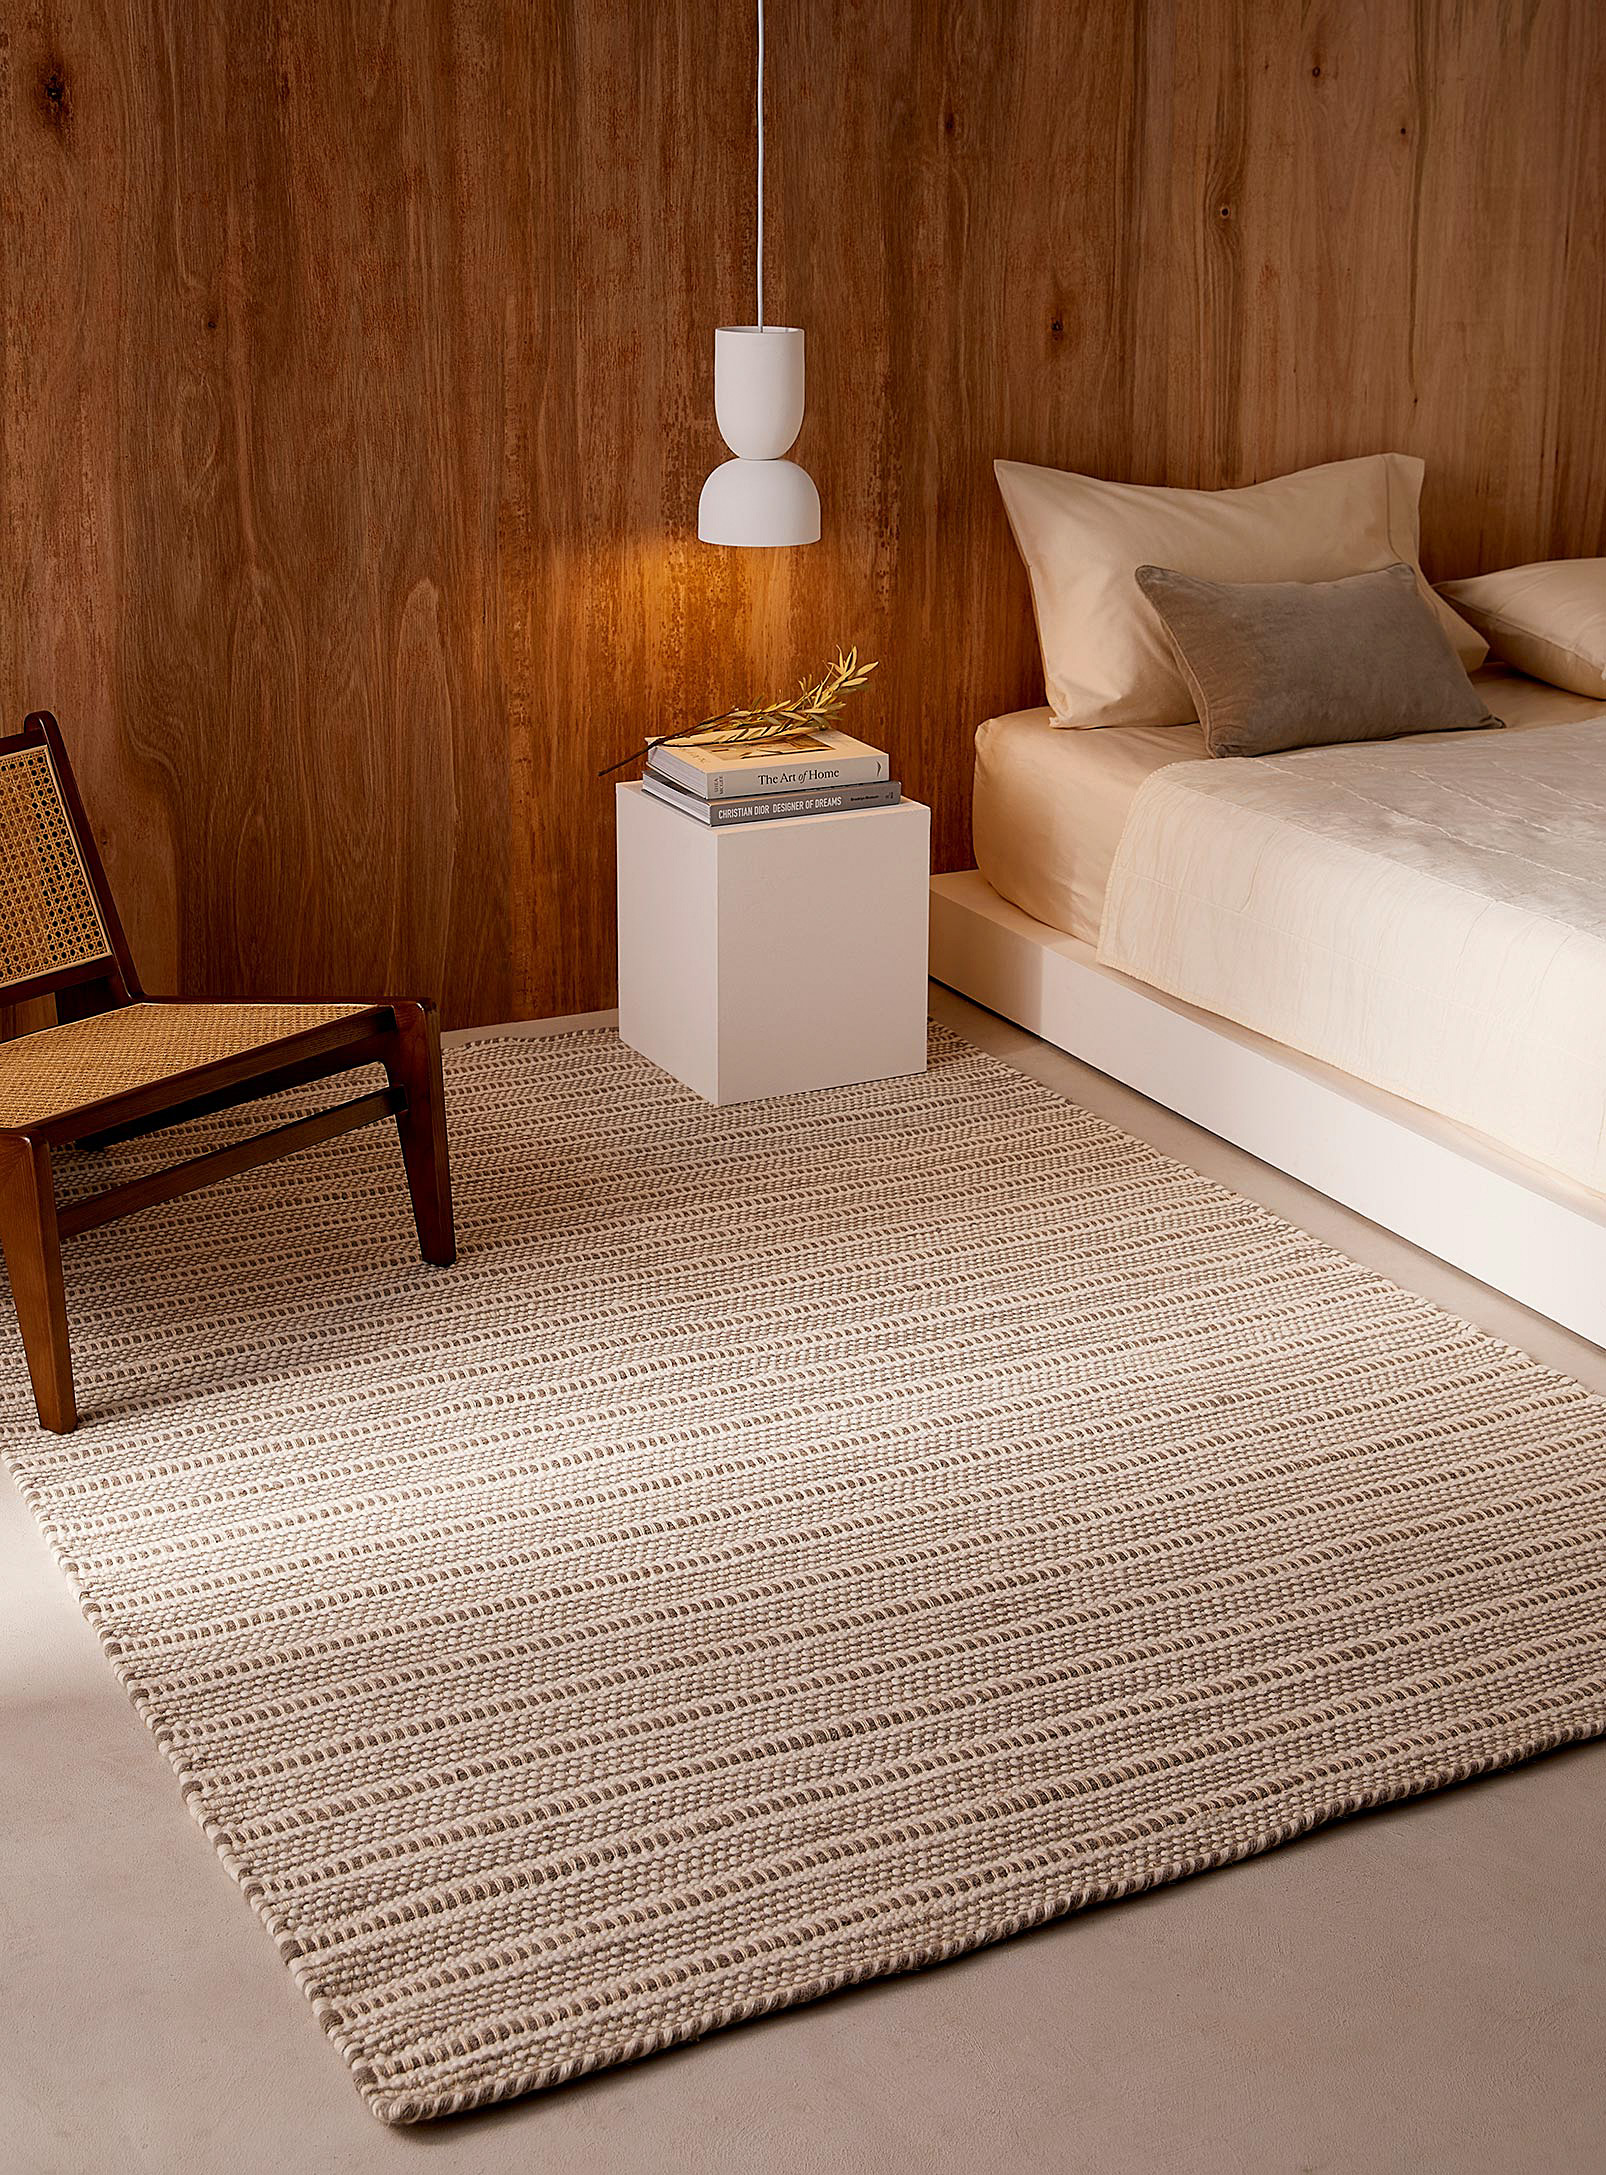 Simons Maison - Textured stripes artisanal rug See available sizes